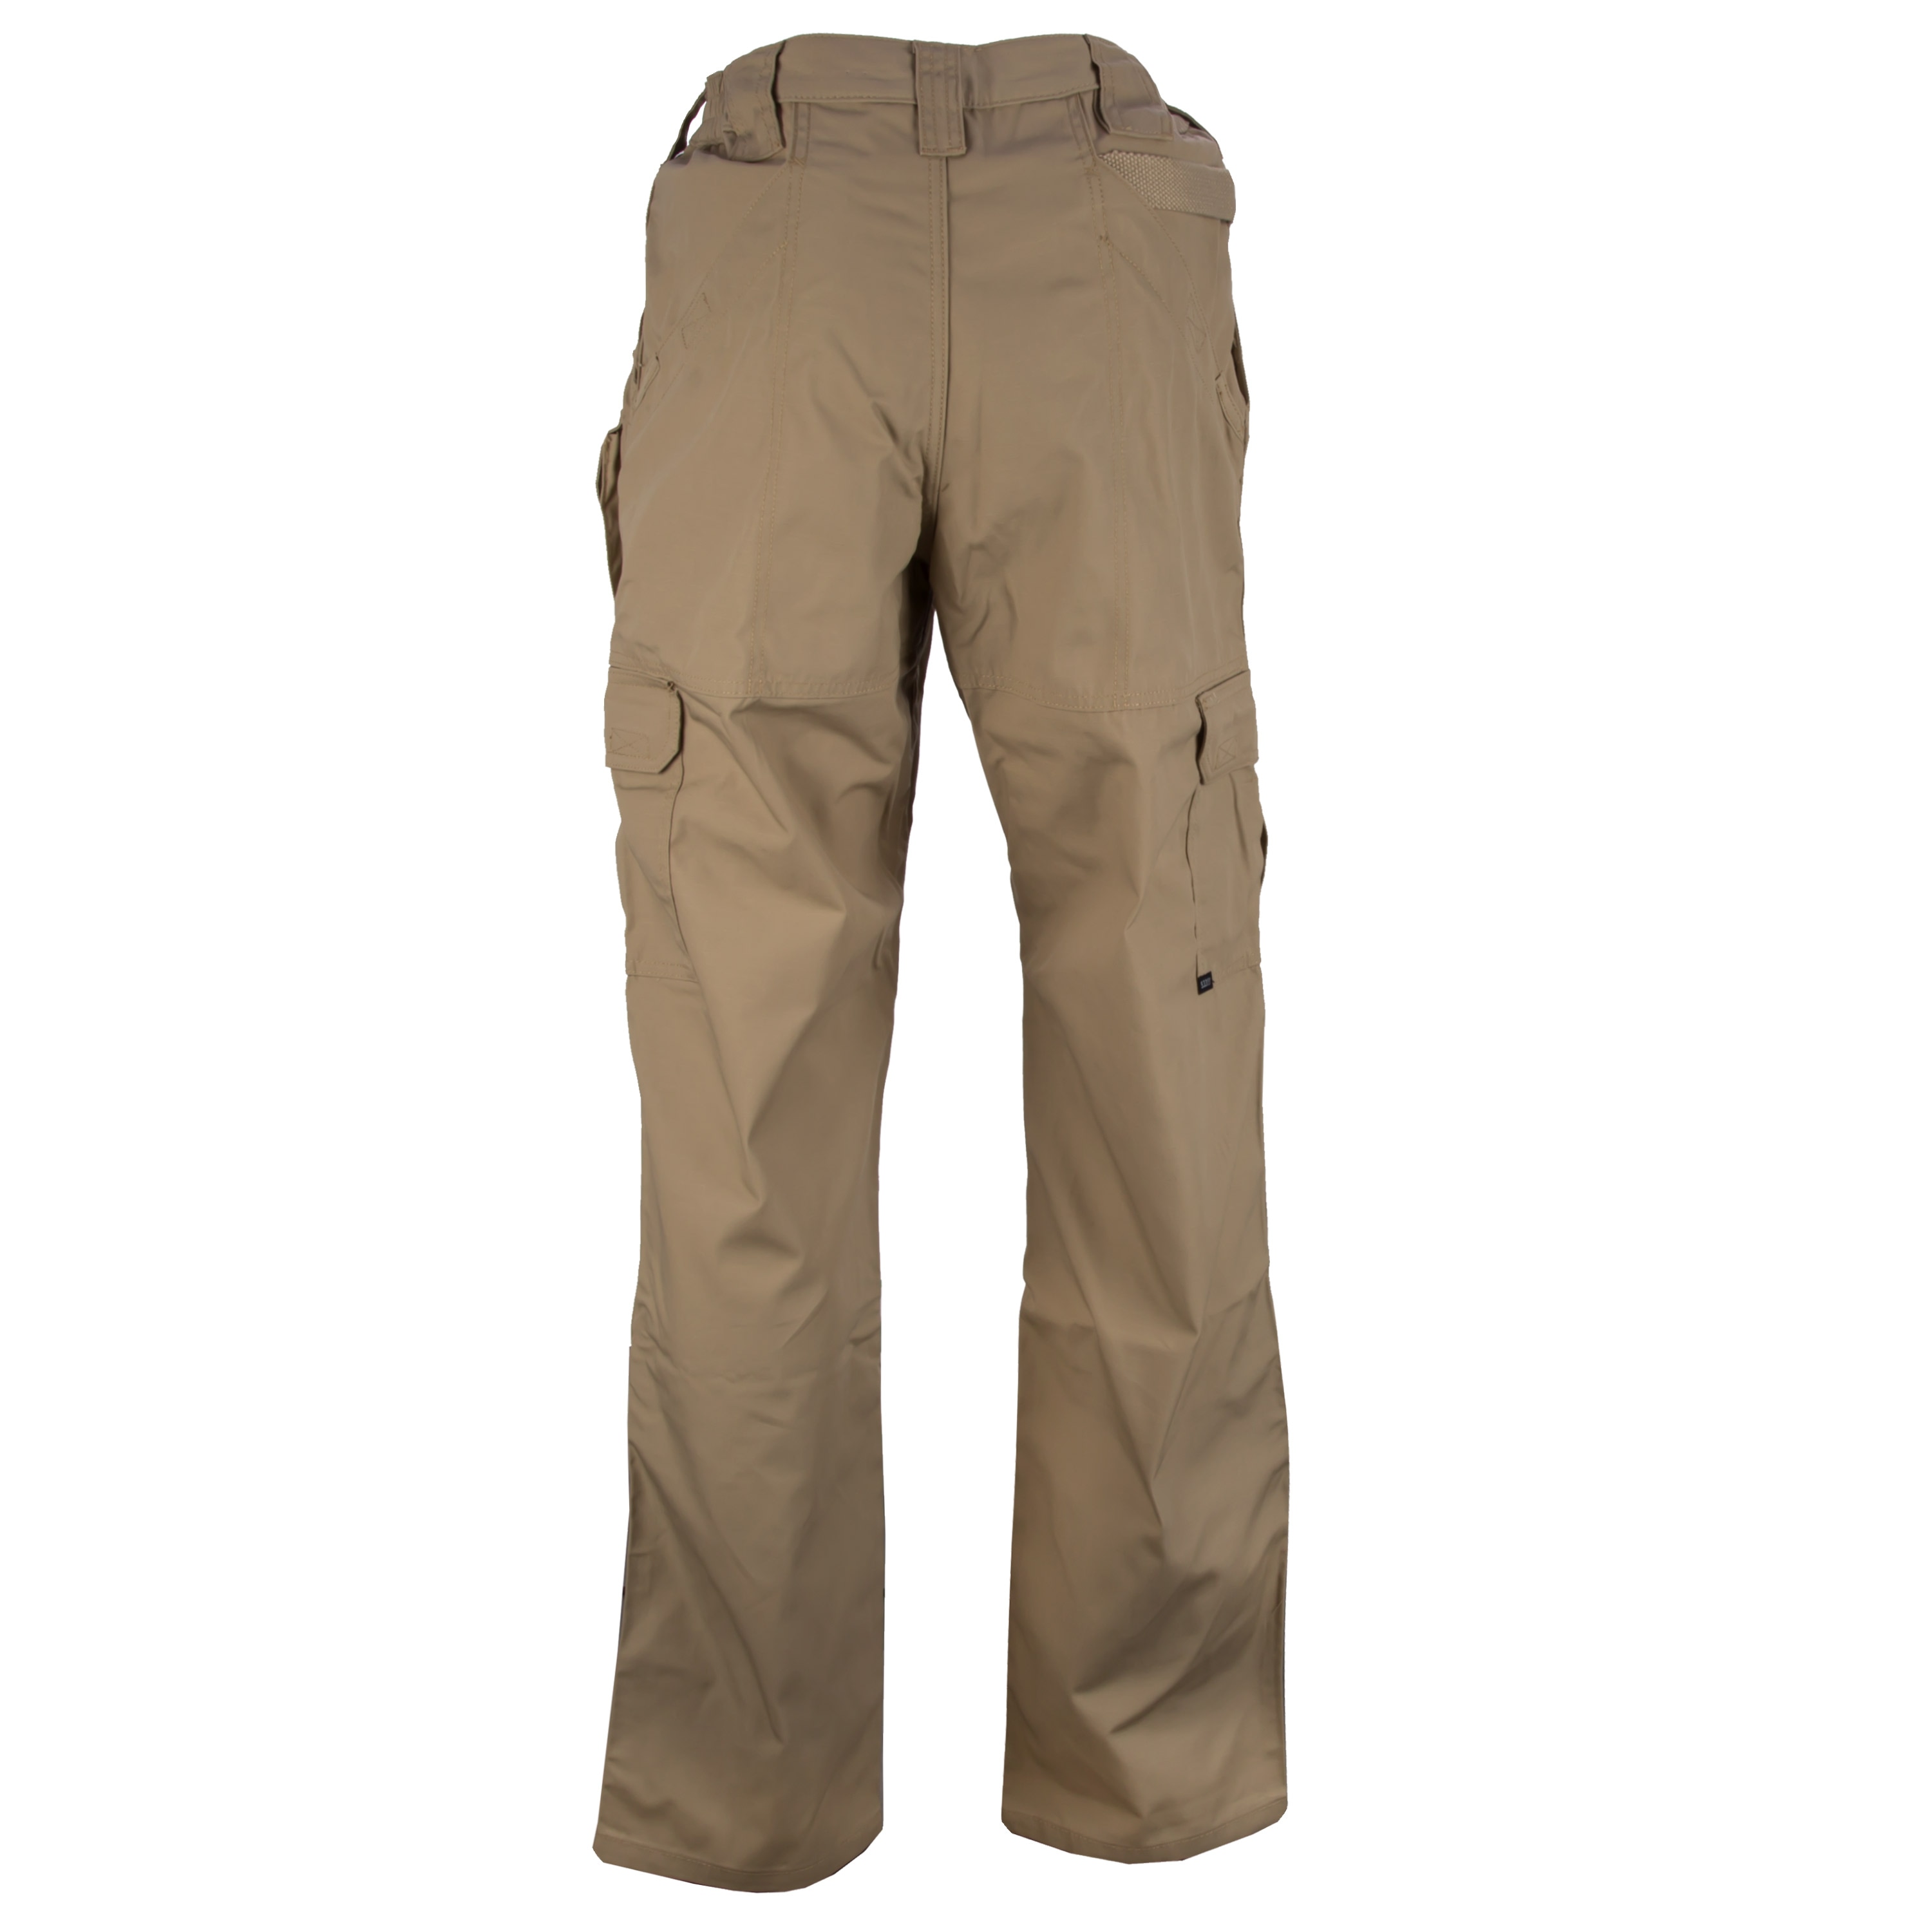 Purchase the 5.11 Taclite Pro Pants khaki by ASMC